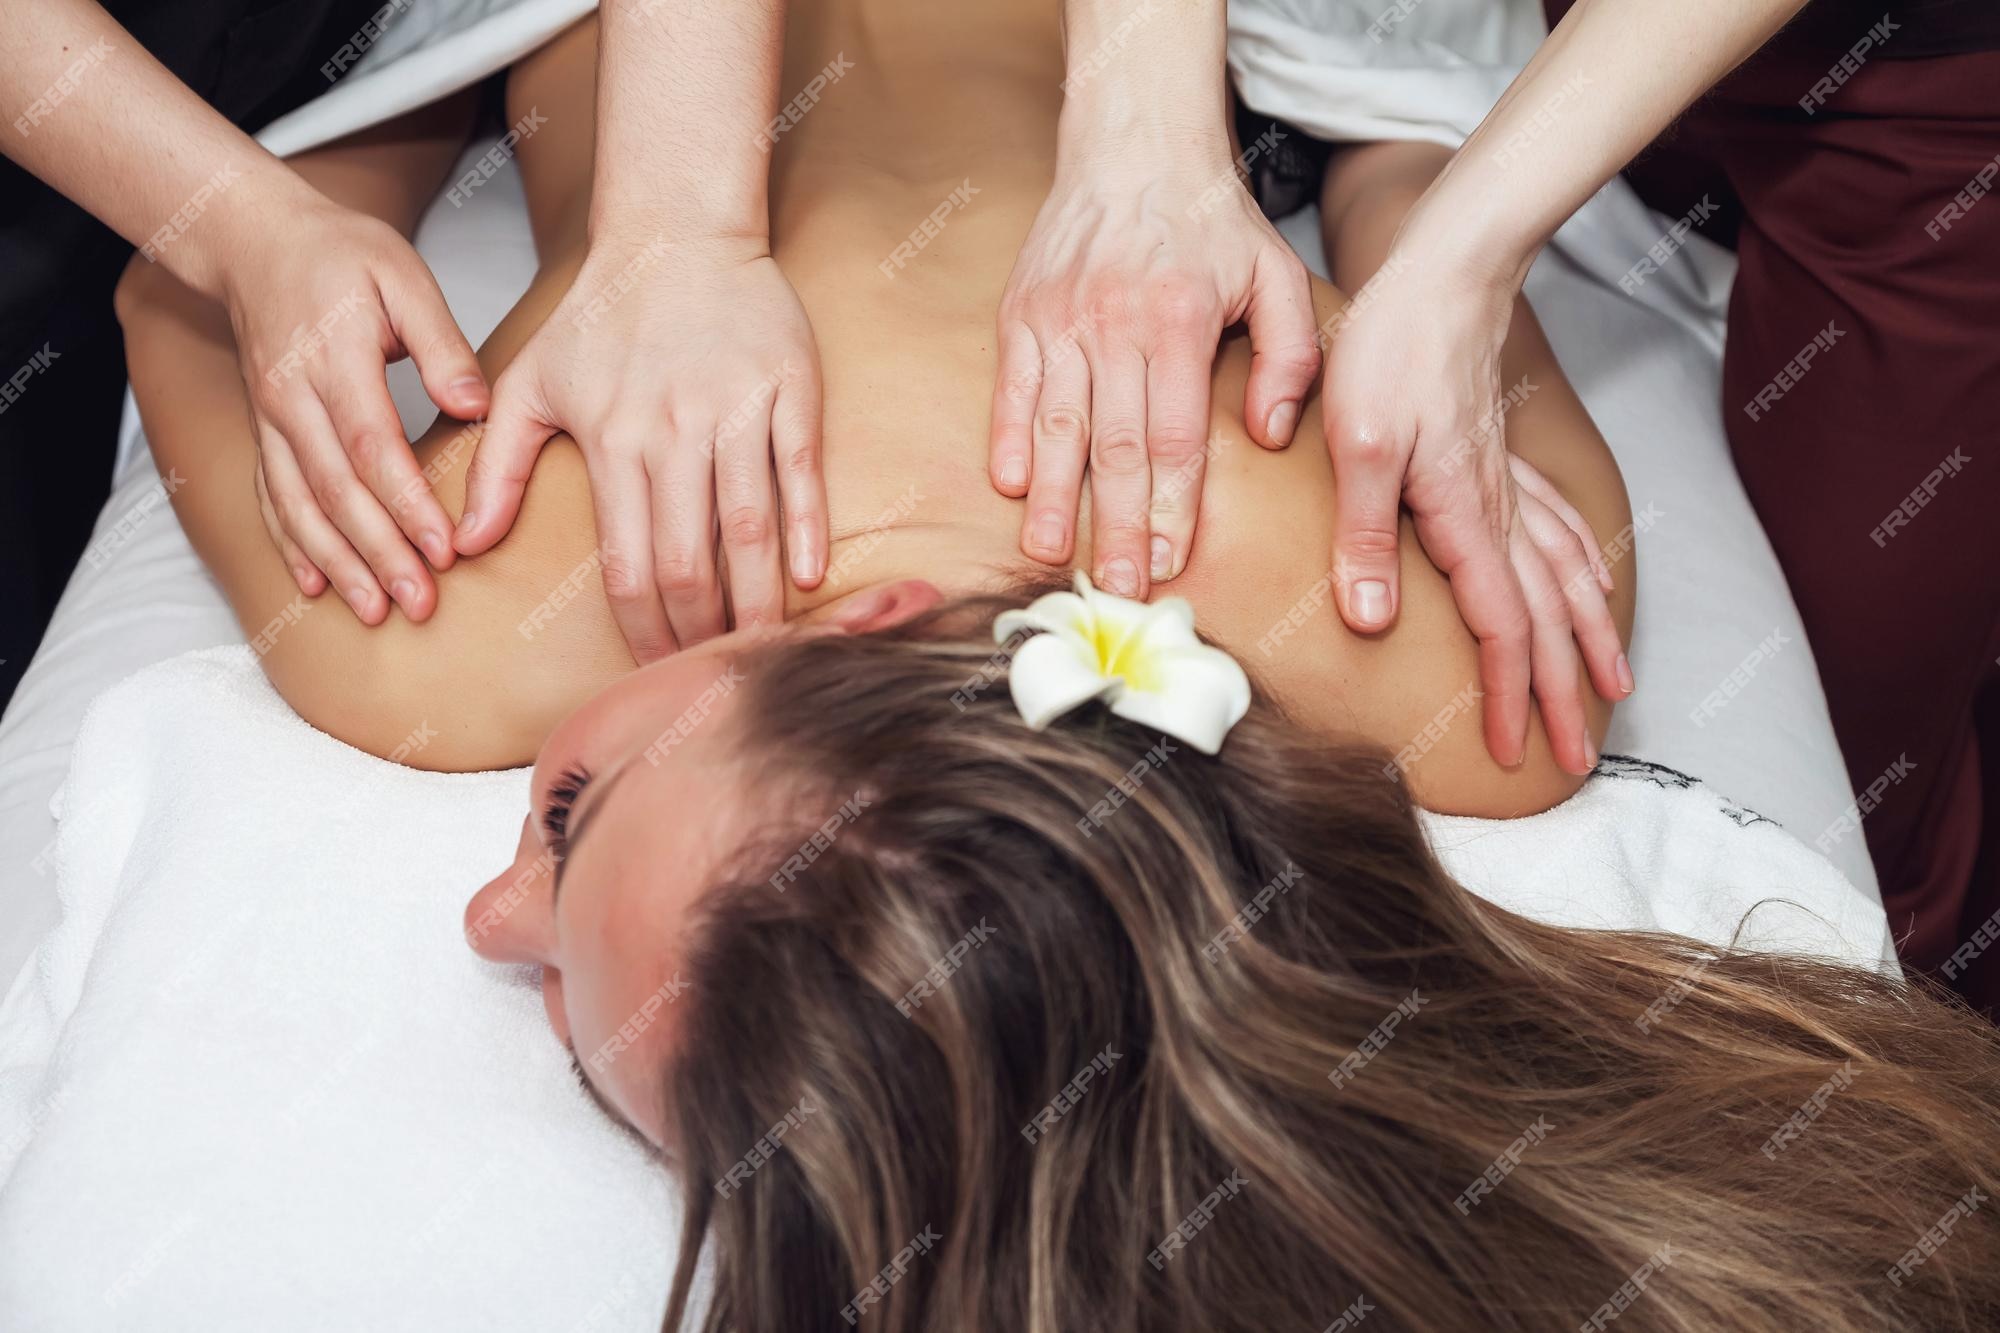 albert adomako recommends 4 hand sensual massage pic